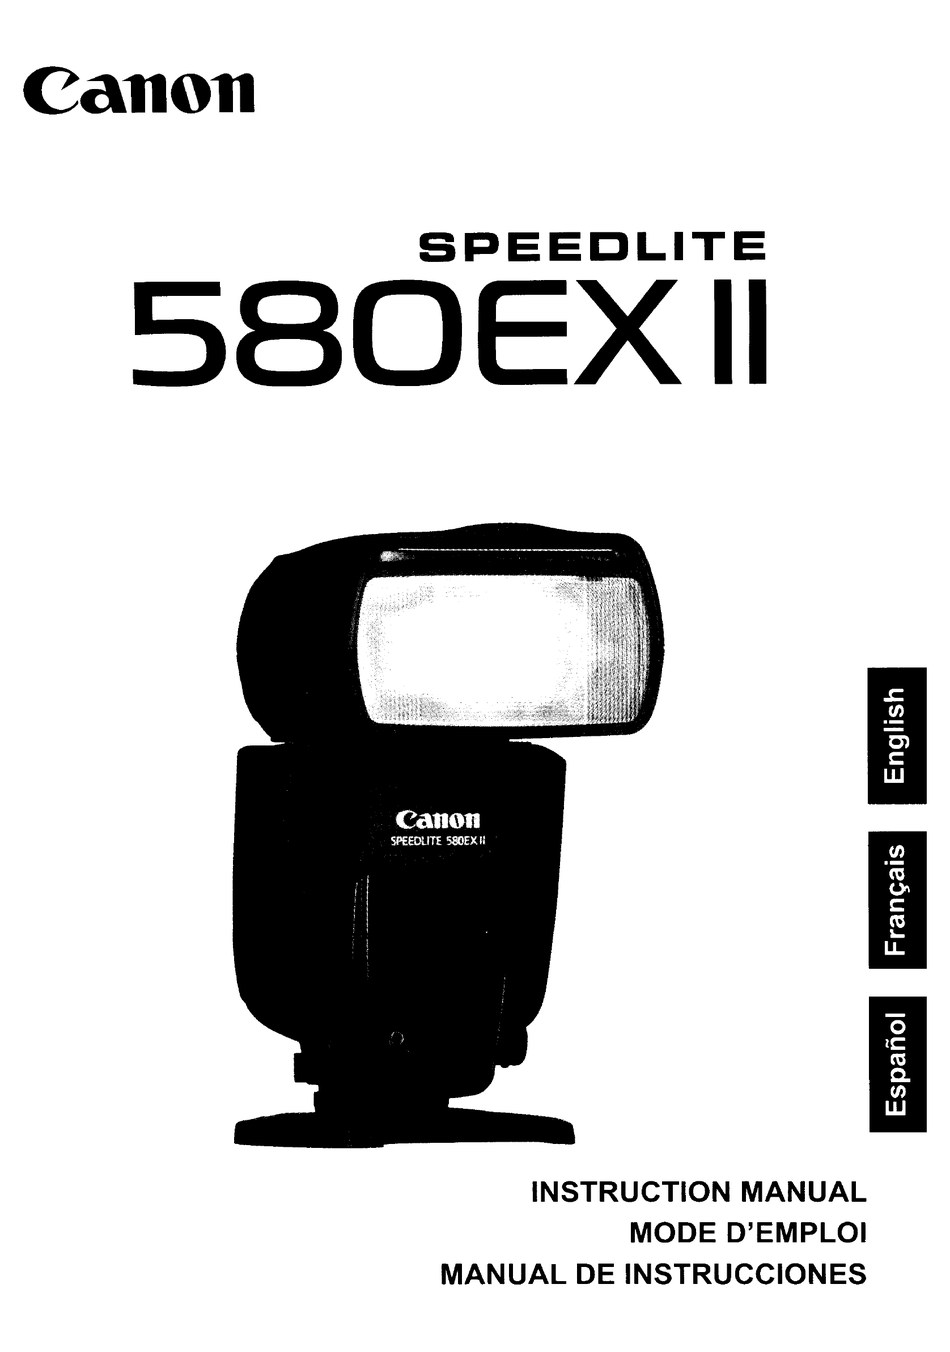 Canon Speedlite 580ex II User's Manual-instruction book-istruzioni inglese 